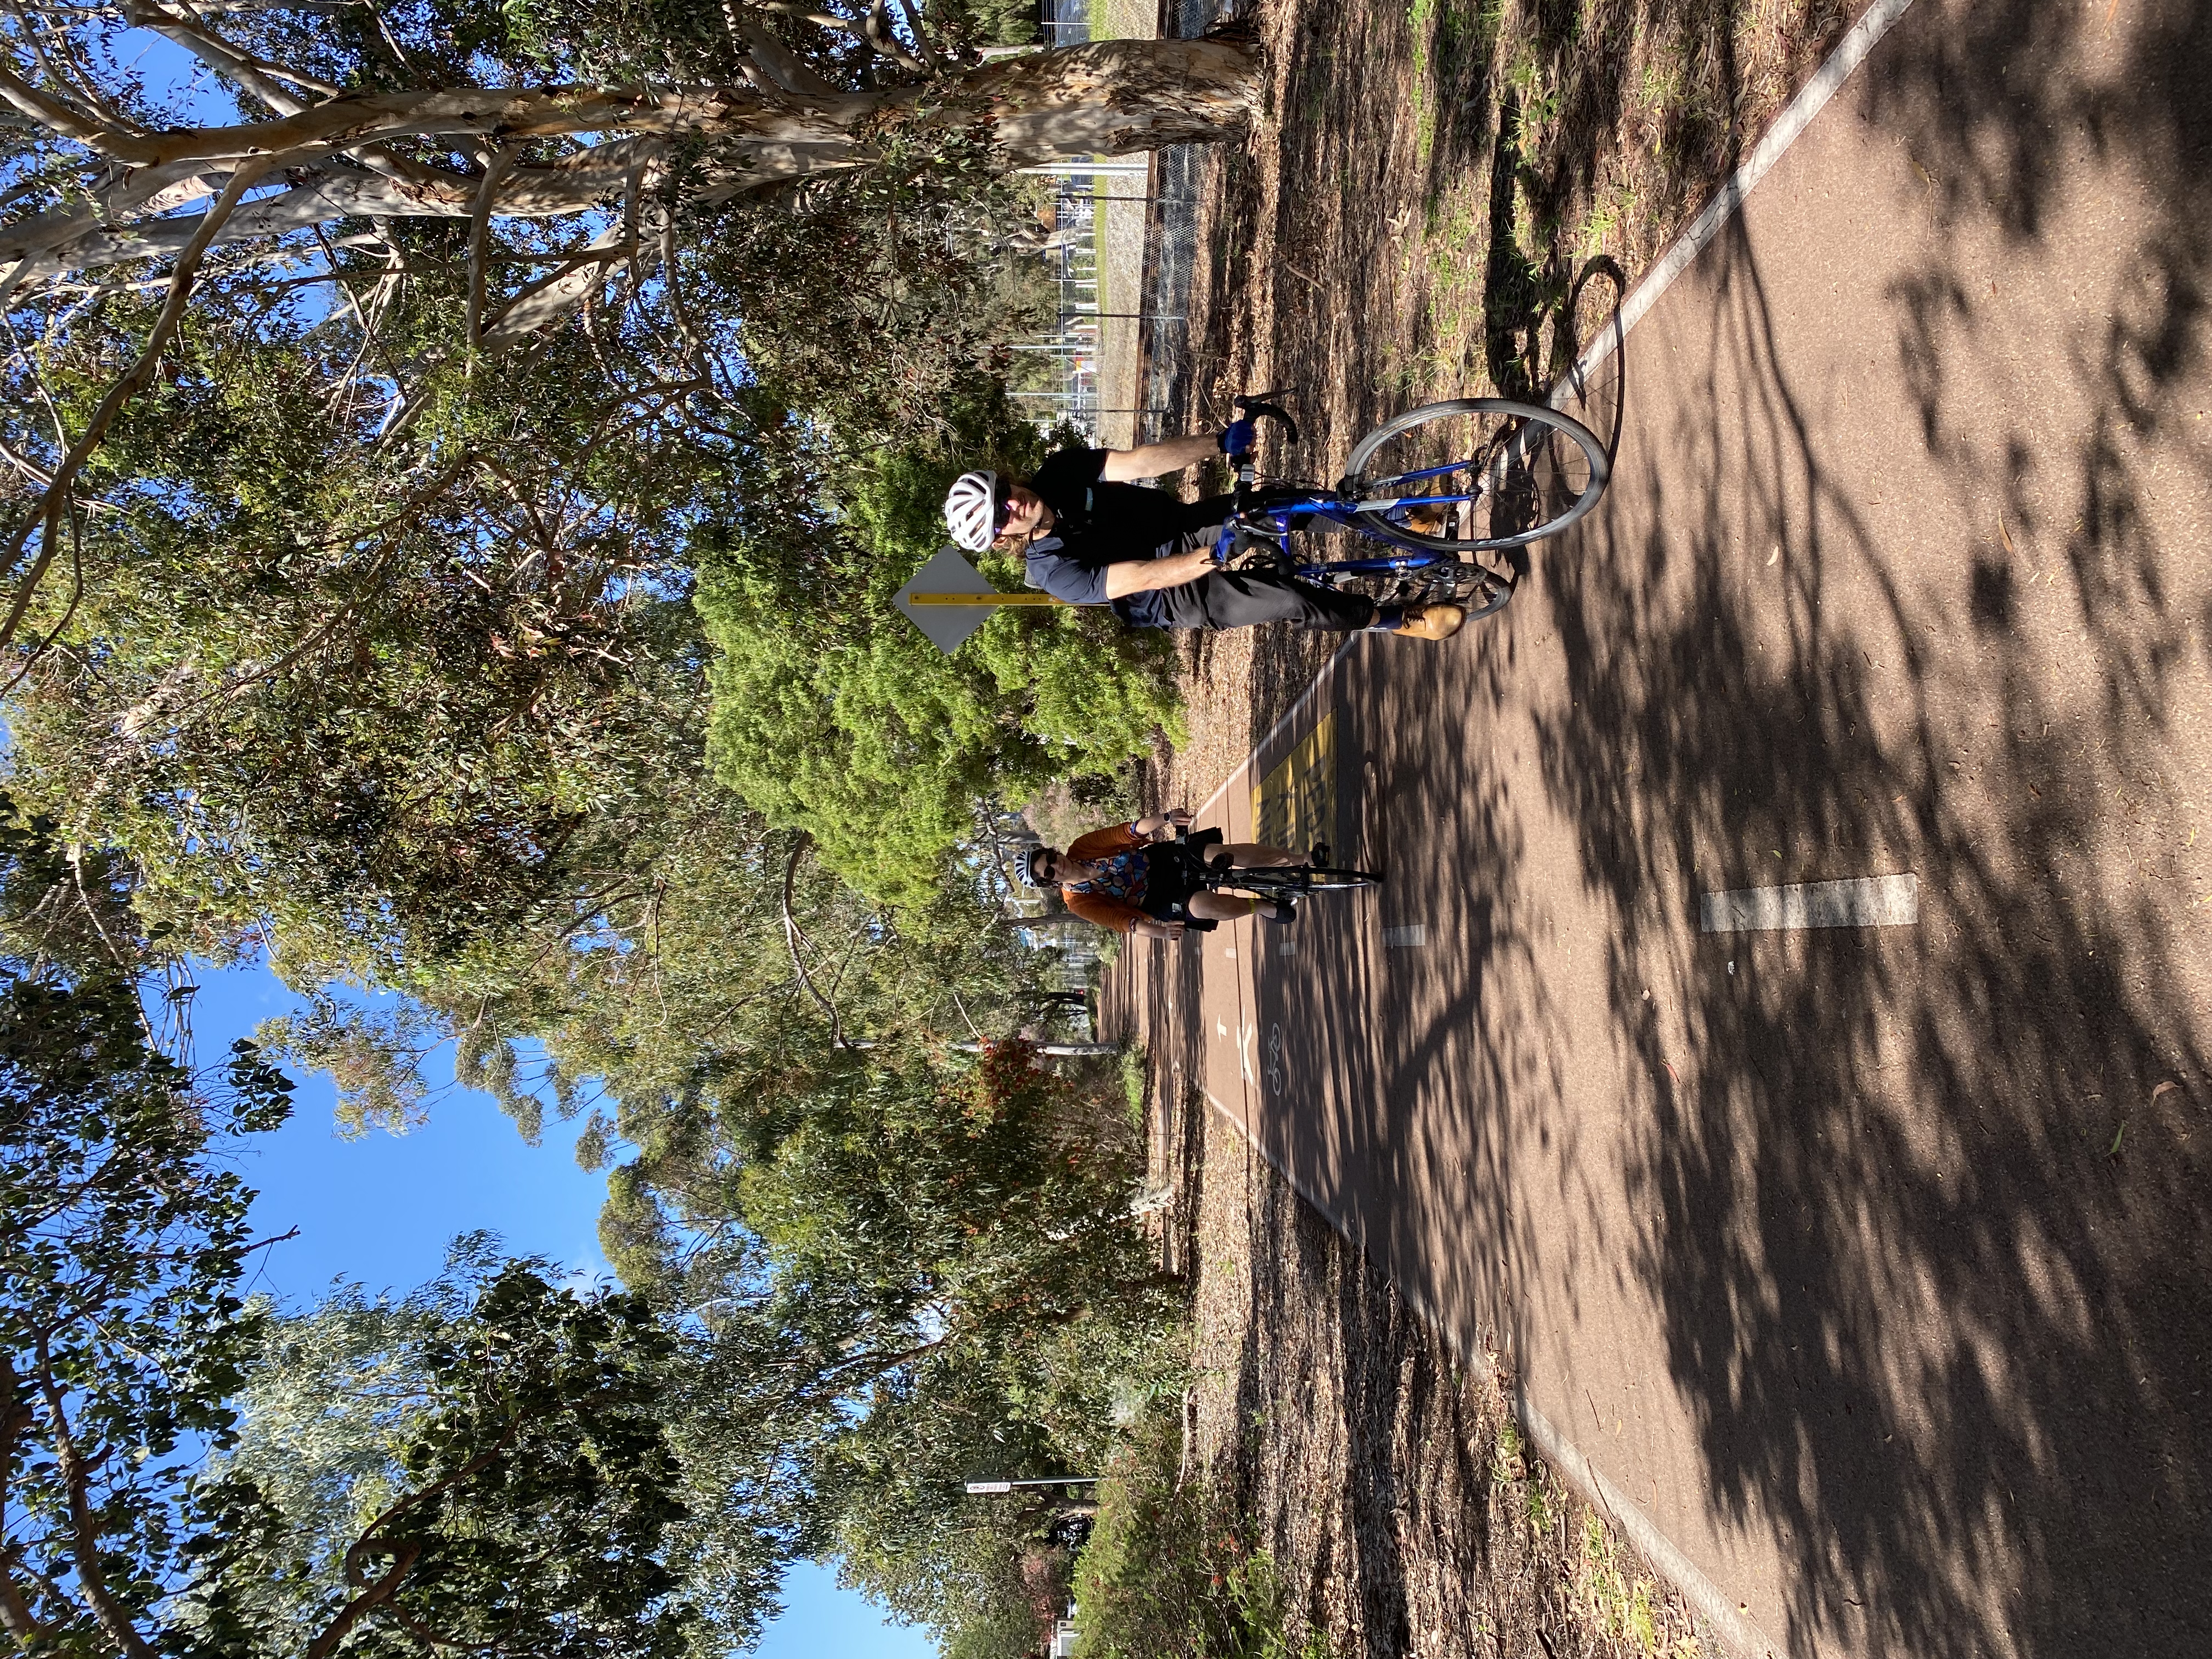 Two people riding a bike on a bike path